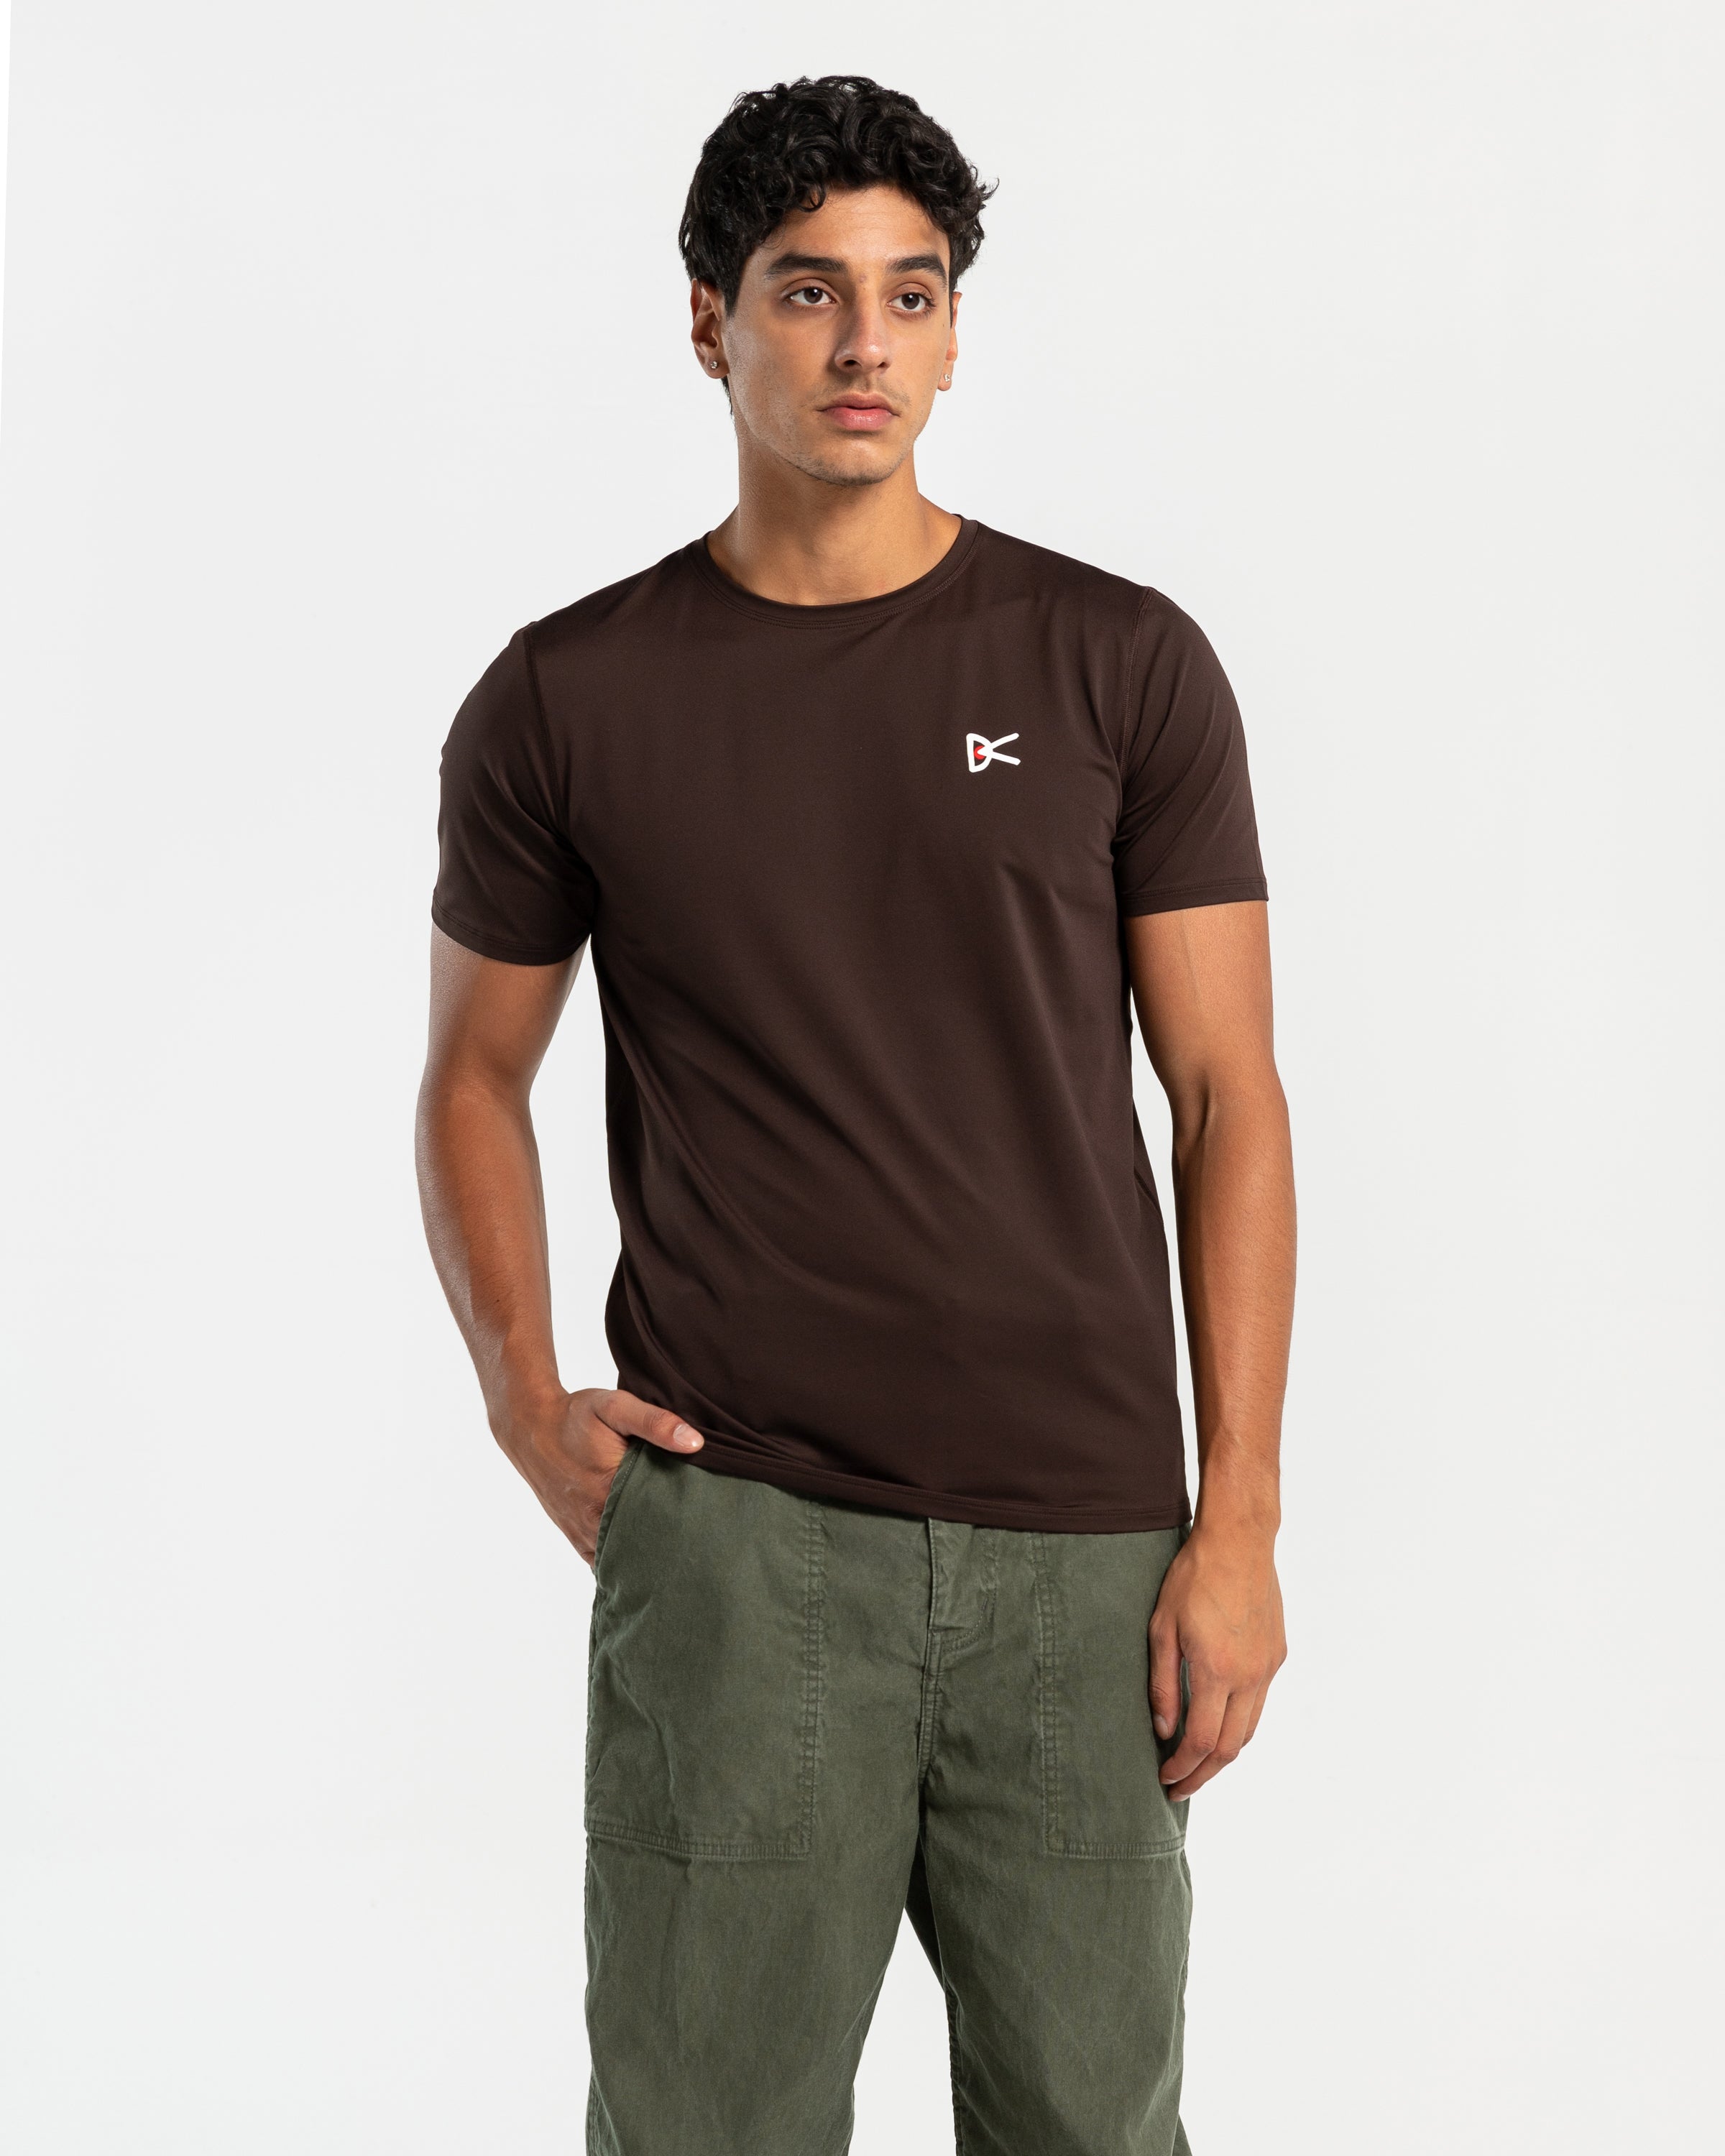 Deva Tech Short Sleeve T-Shirt in Cacao